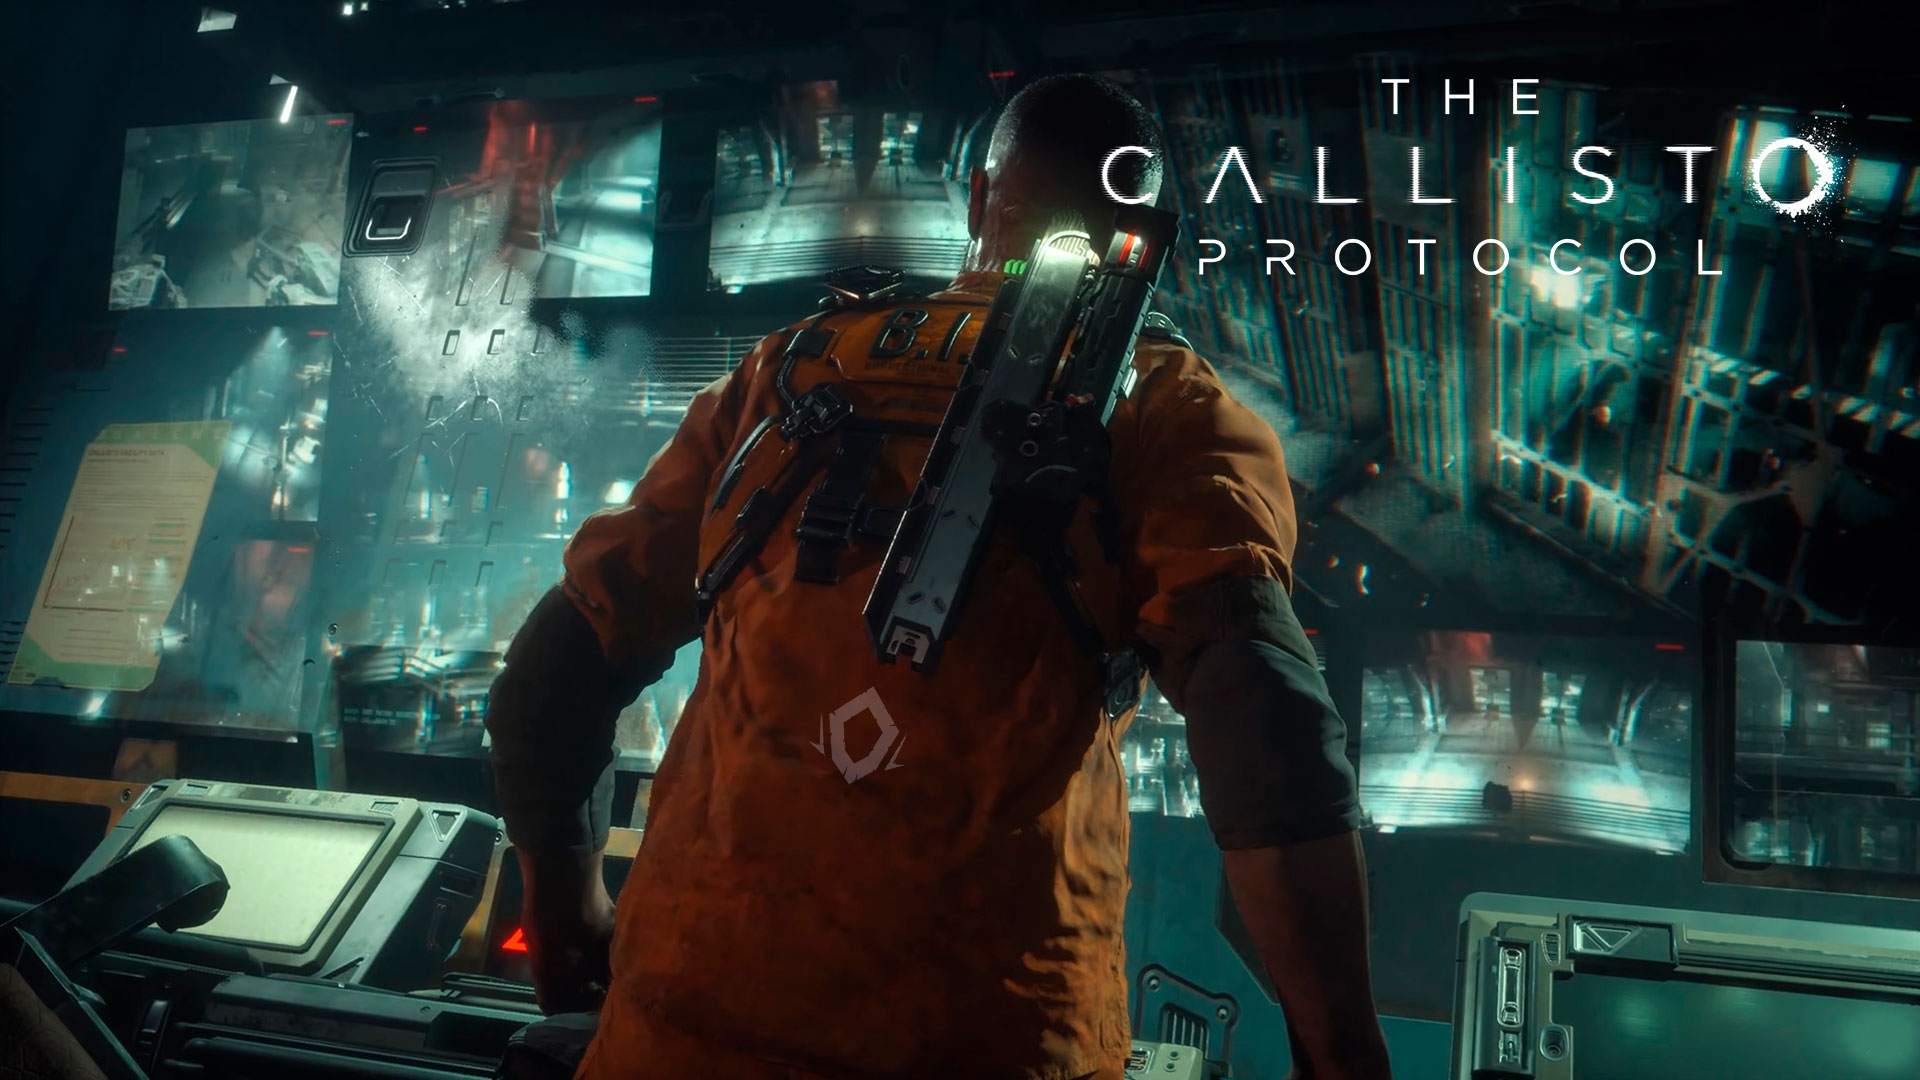 The Callisto Protocol chega aos consoles e PC em 2 de dezembro pela  Striking Distance Studios e Krafton - Gamers & Games